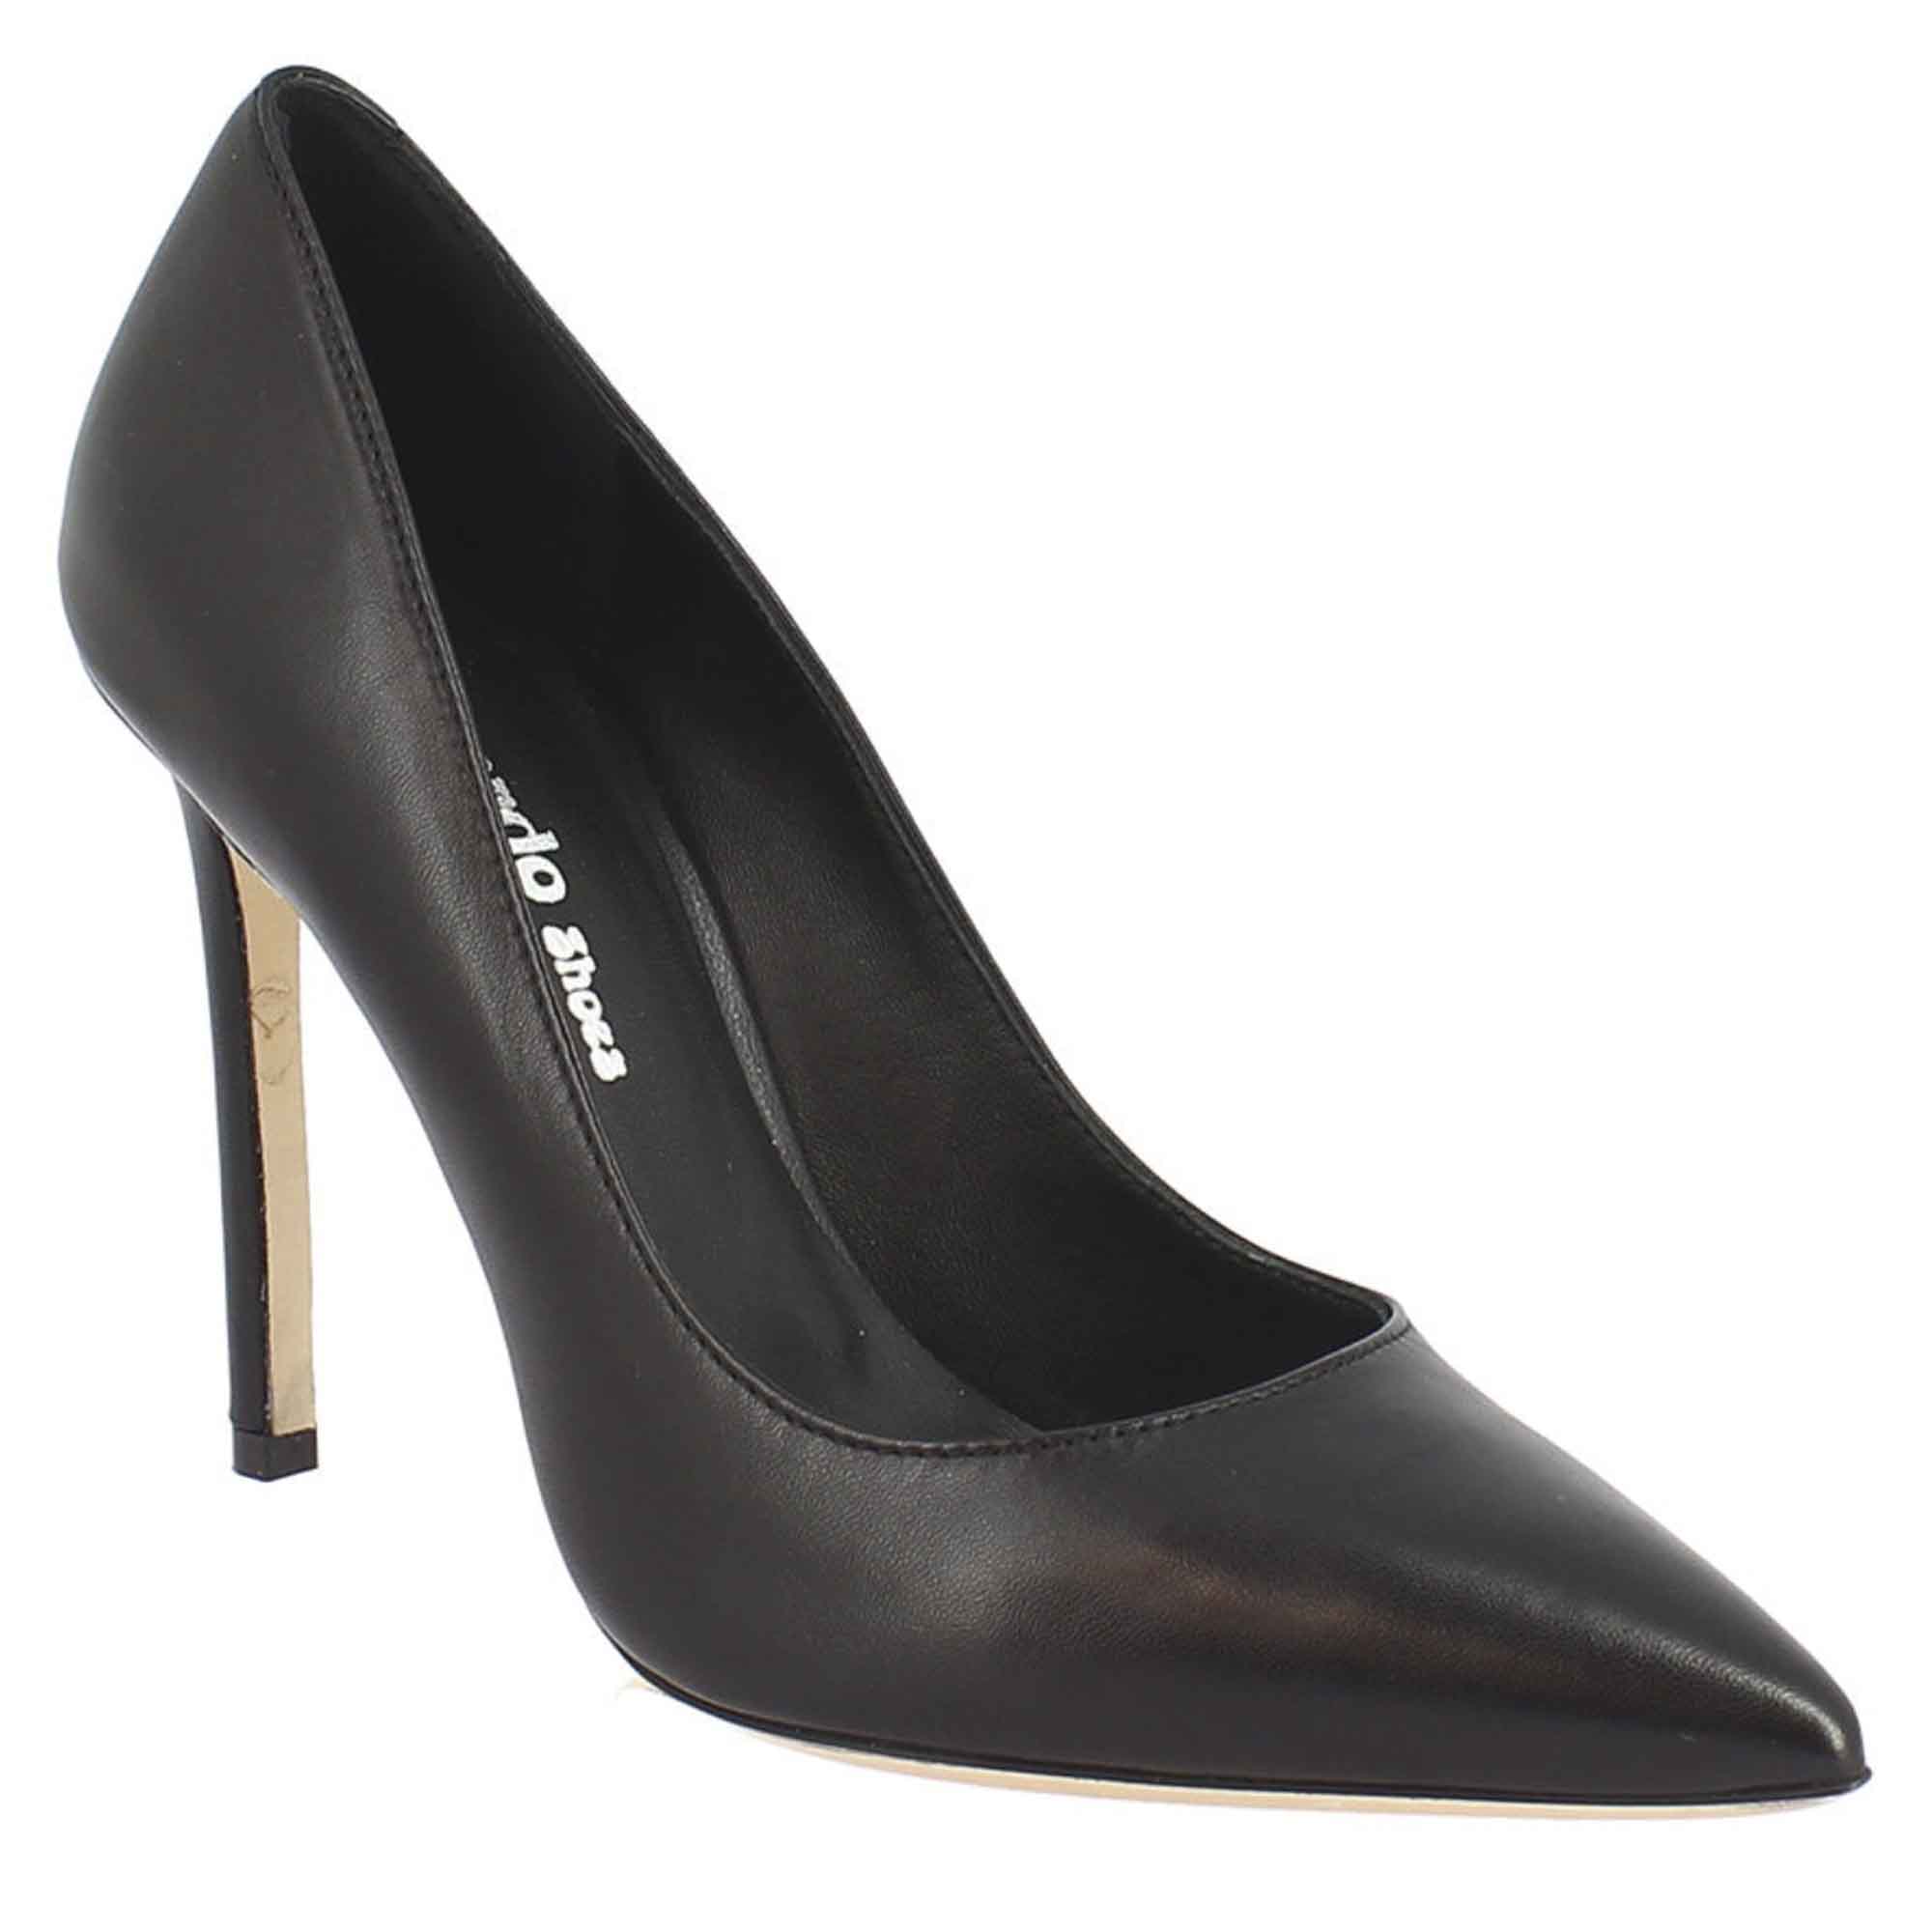 Elegant women's handmade high heels pumps in black leather